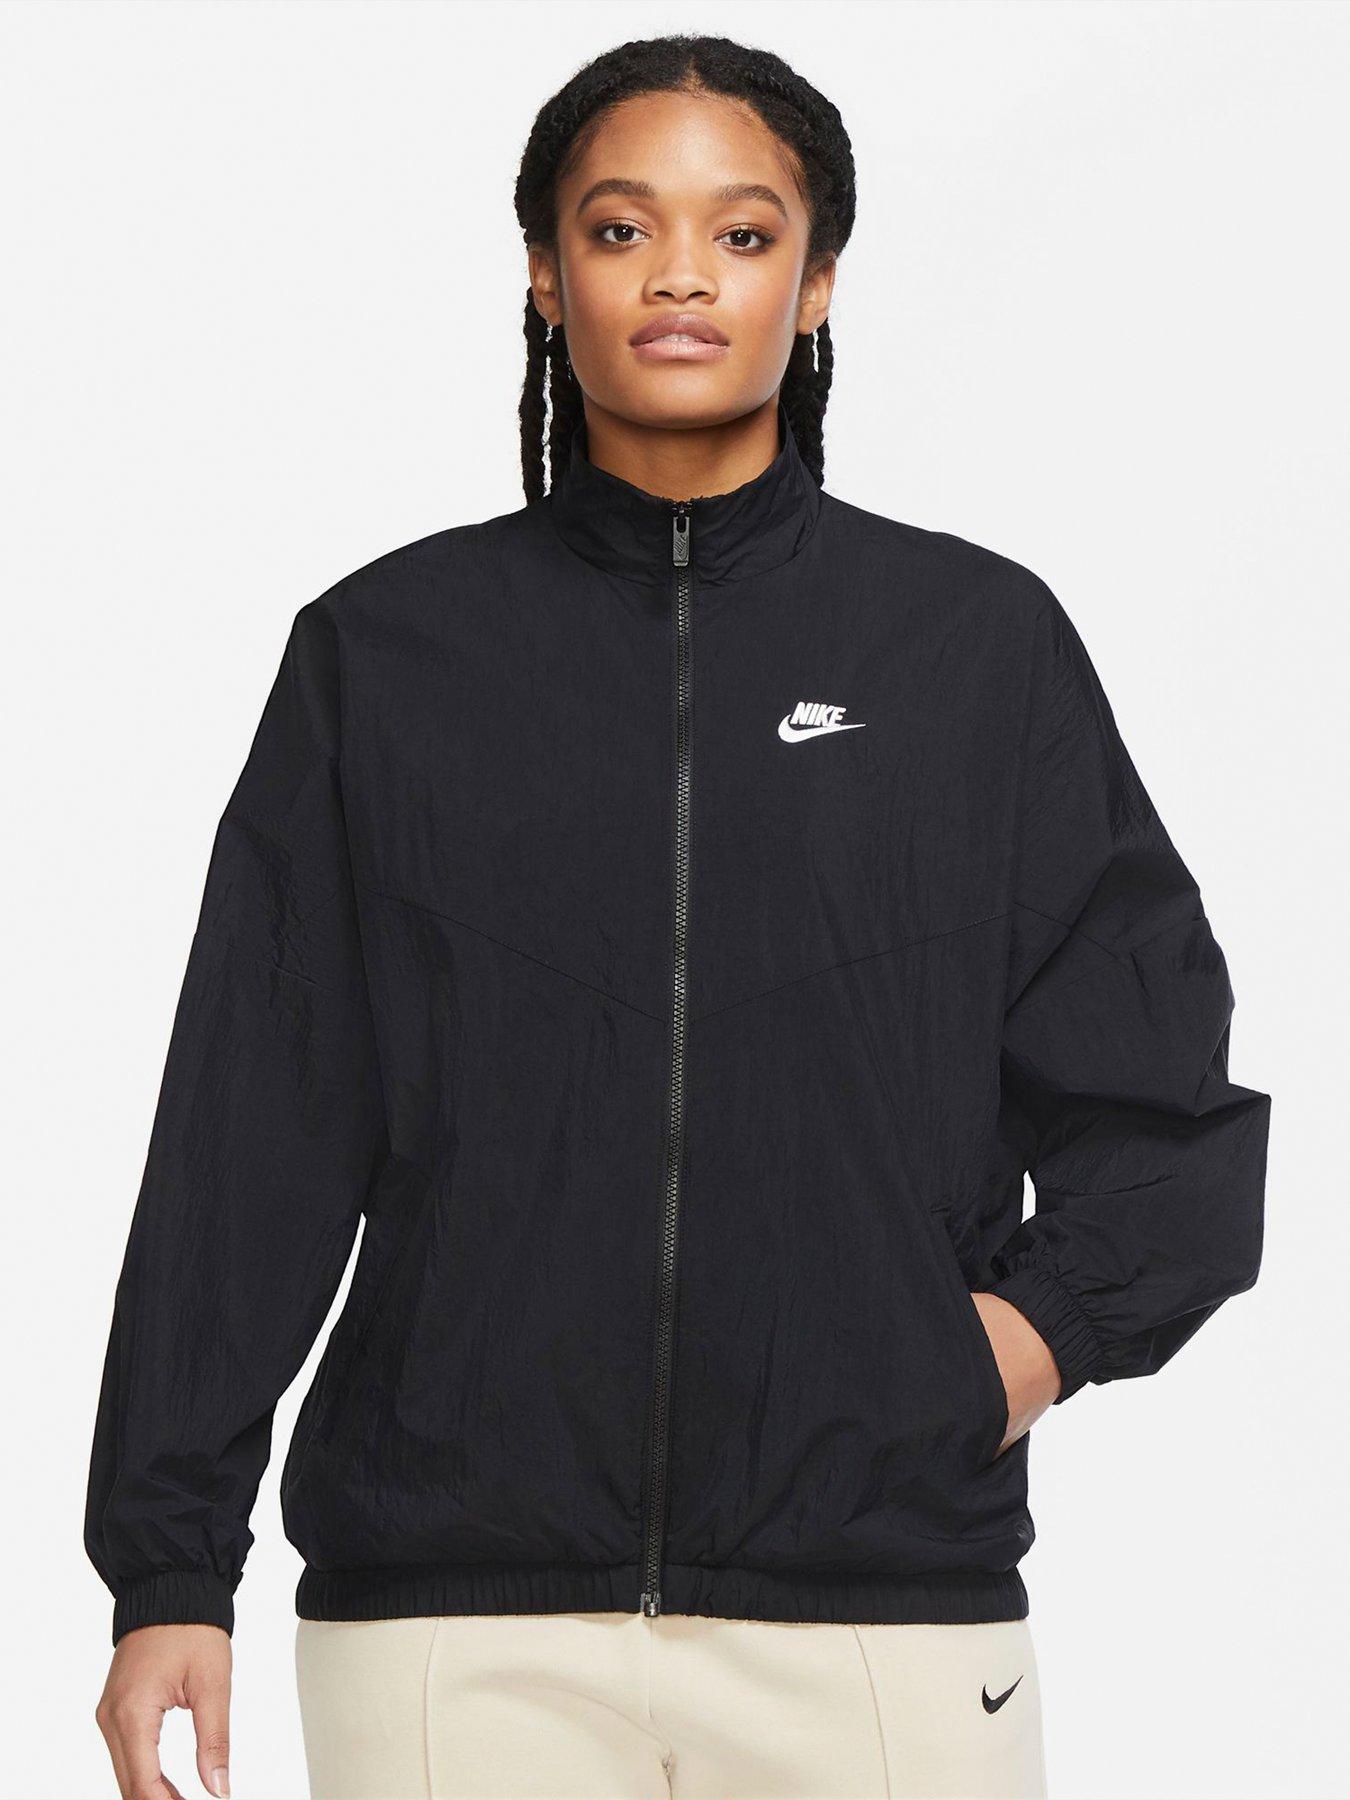 Women's Nike Jackets & Coats Very.co.uk